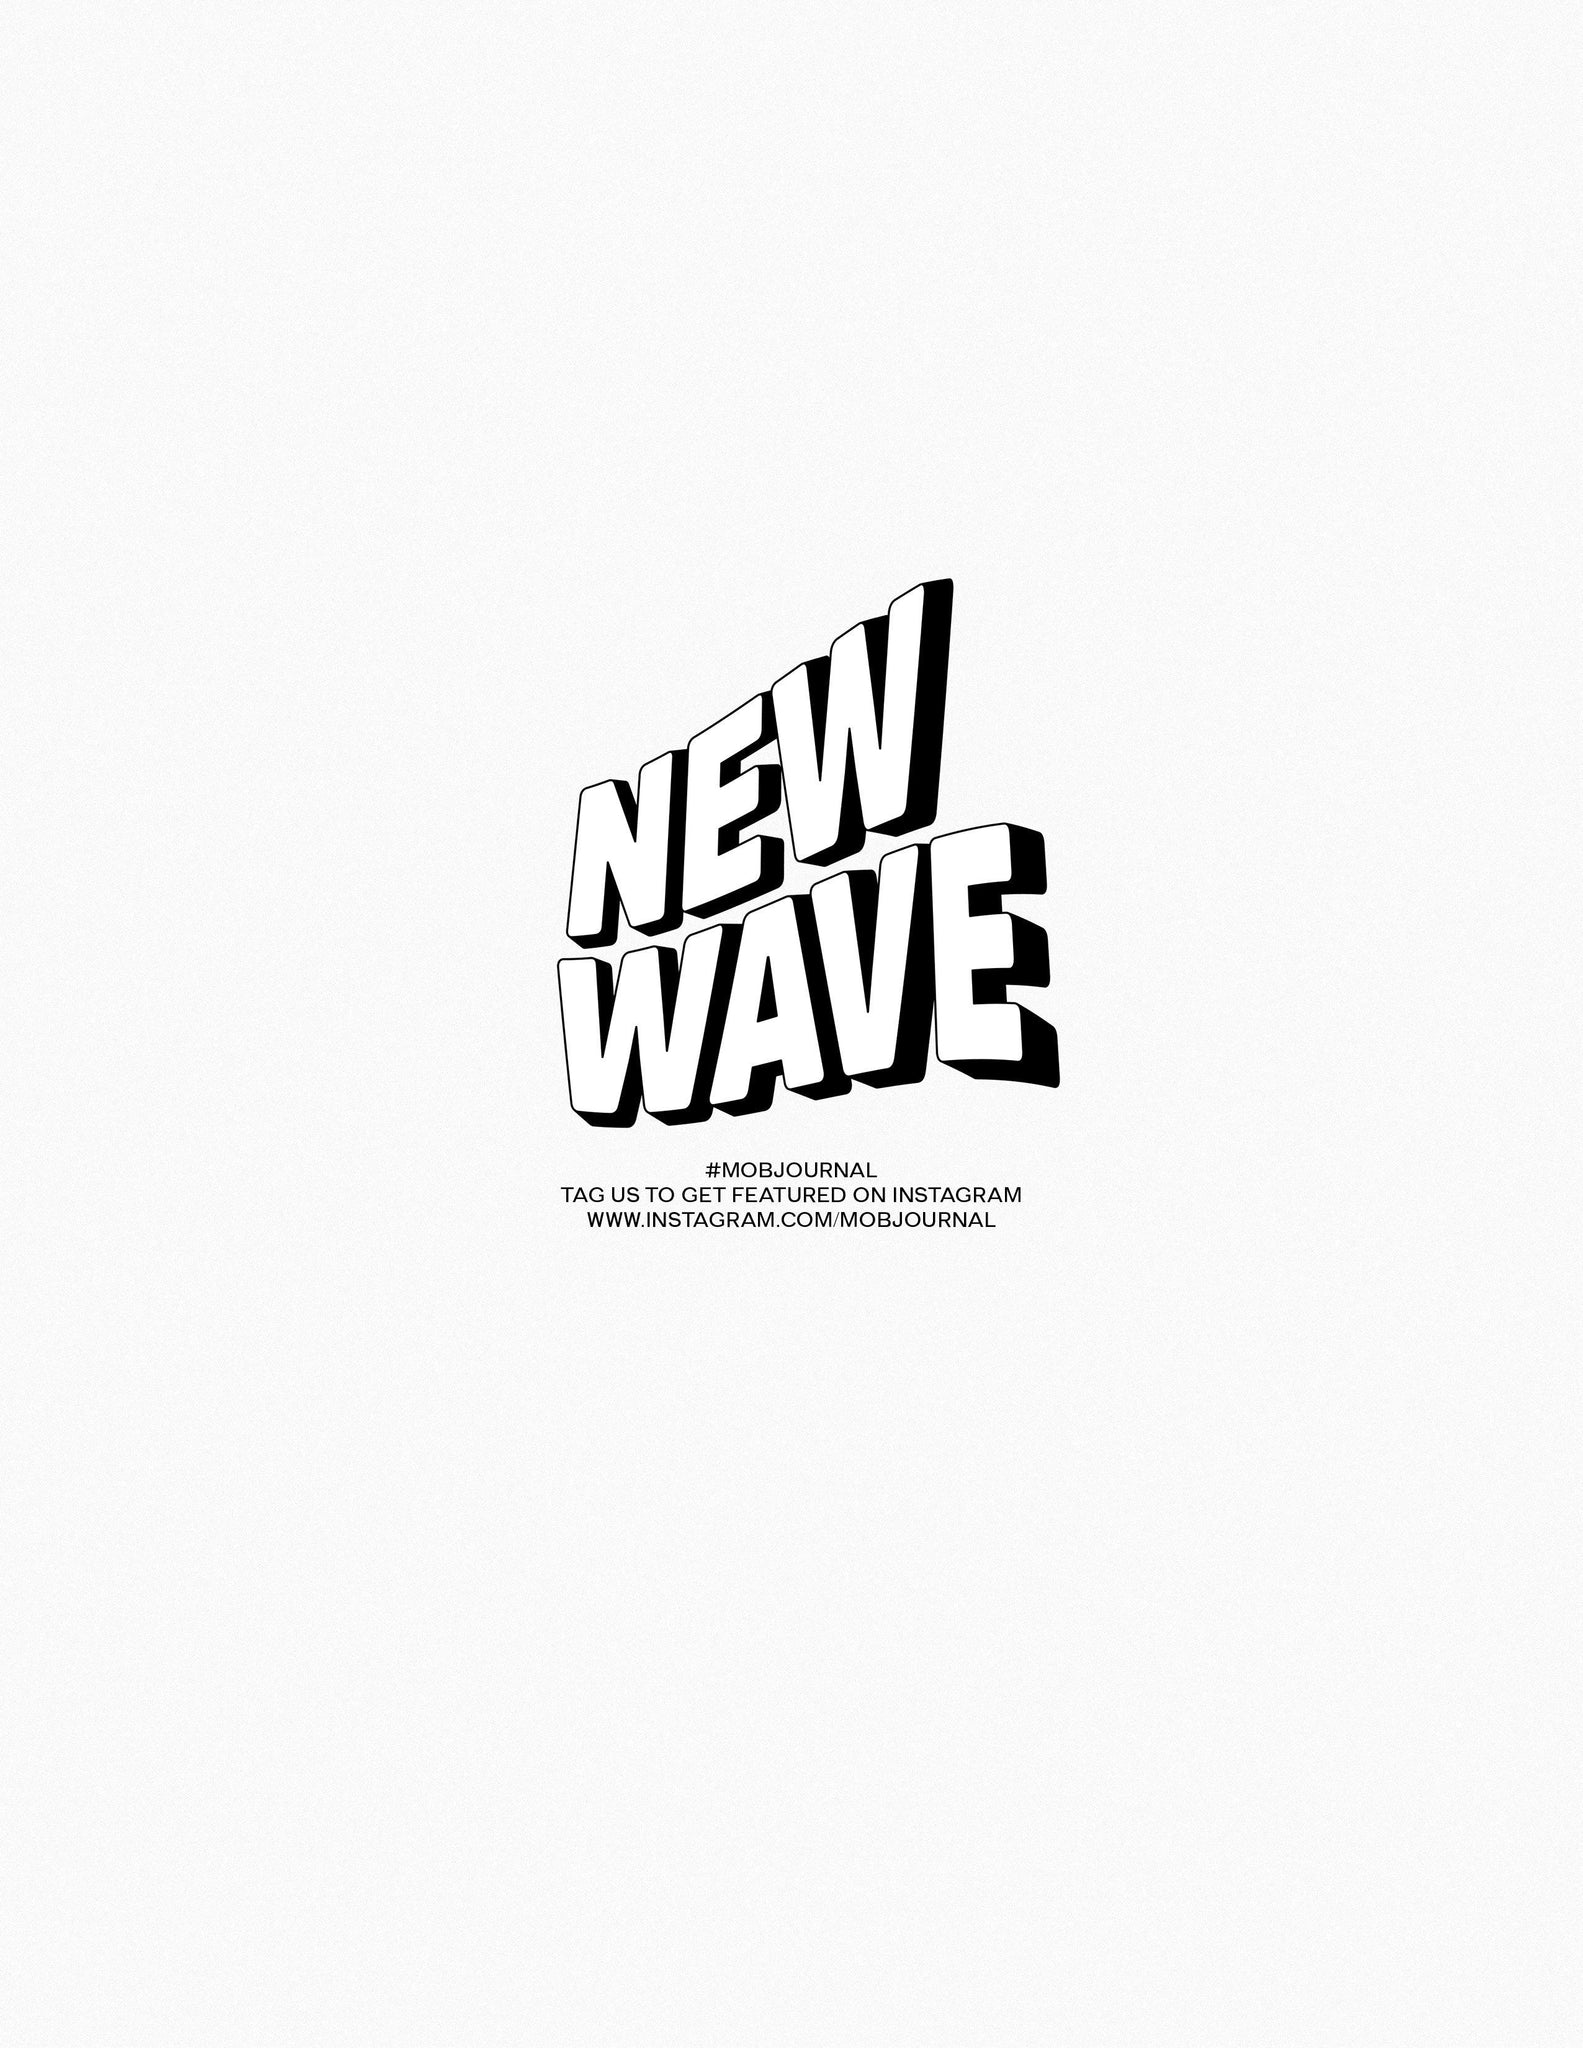 NEW WAVE | VOLUME FOURTEEN | ISSUE #10 - Mob Journal